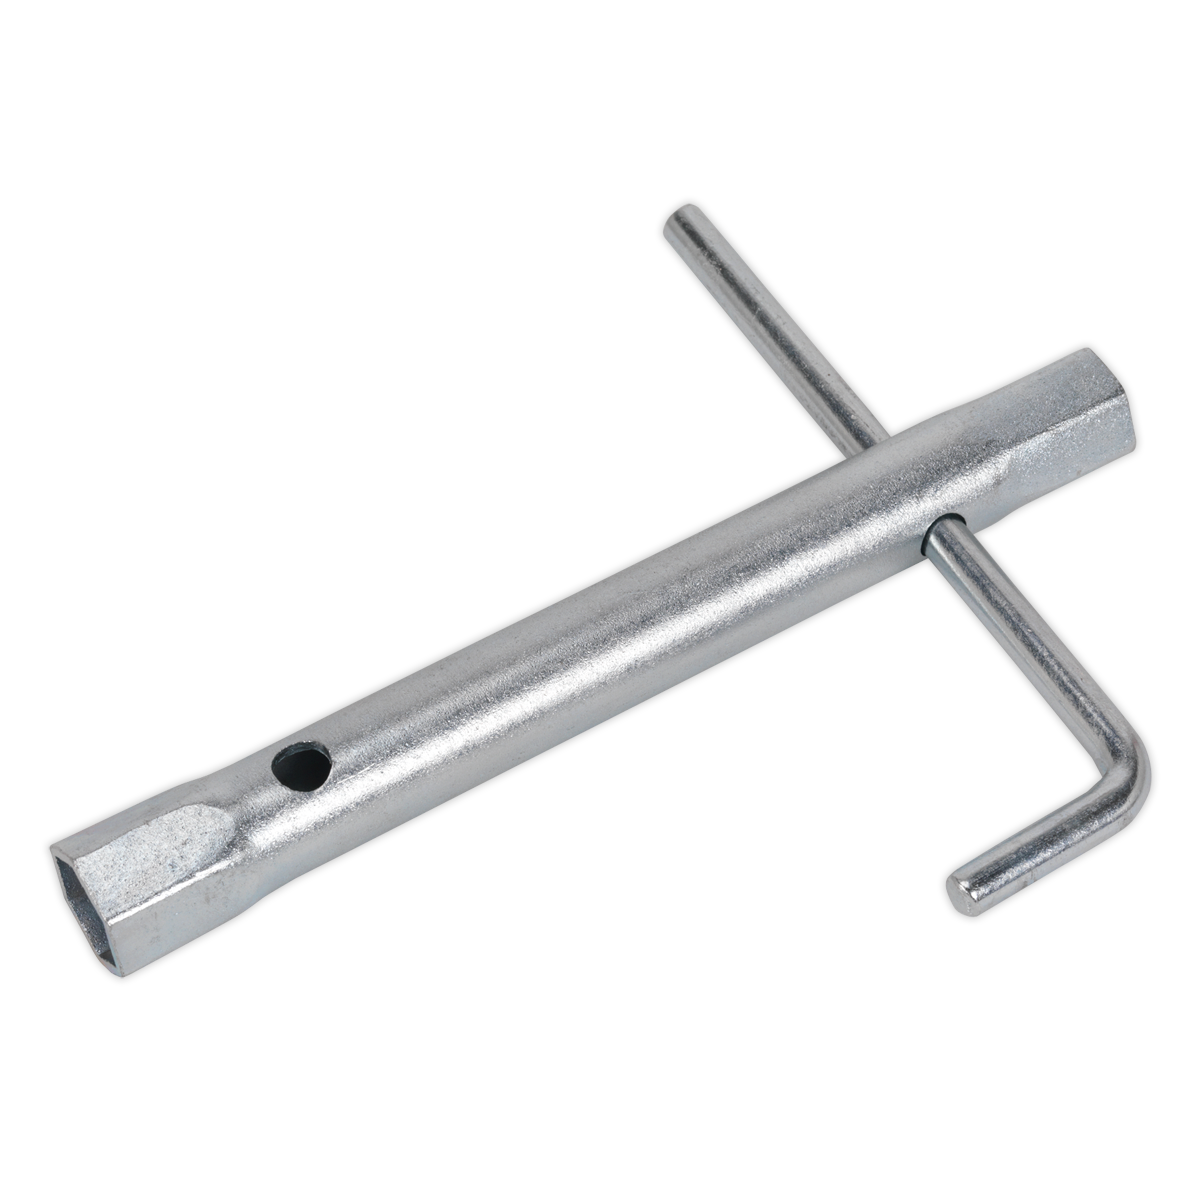 Double End Long Reach Spark Plug Box Spanner 14/16mm with L-Bar